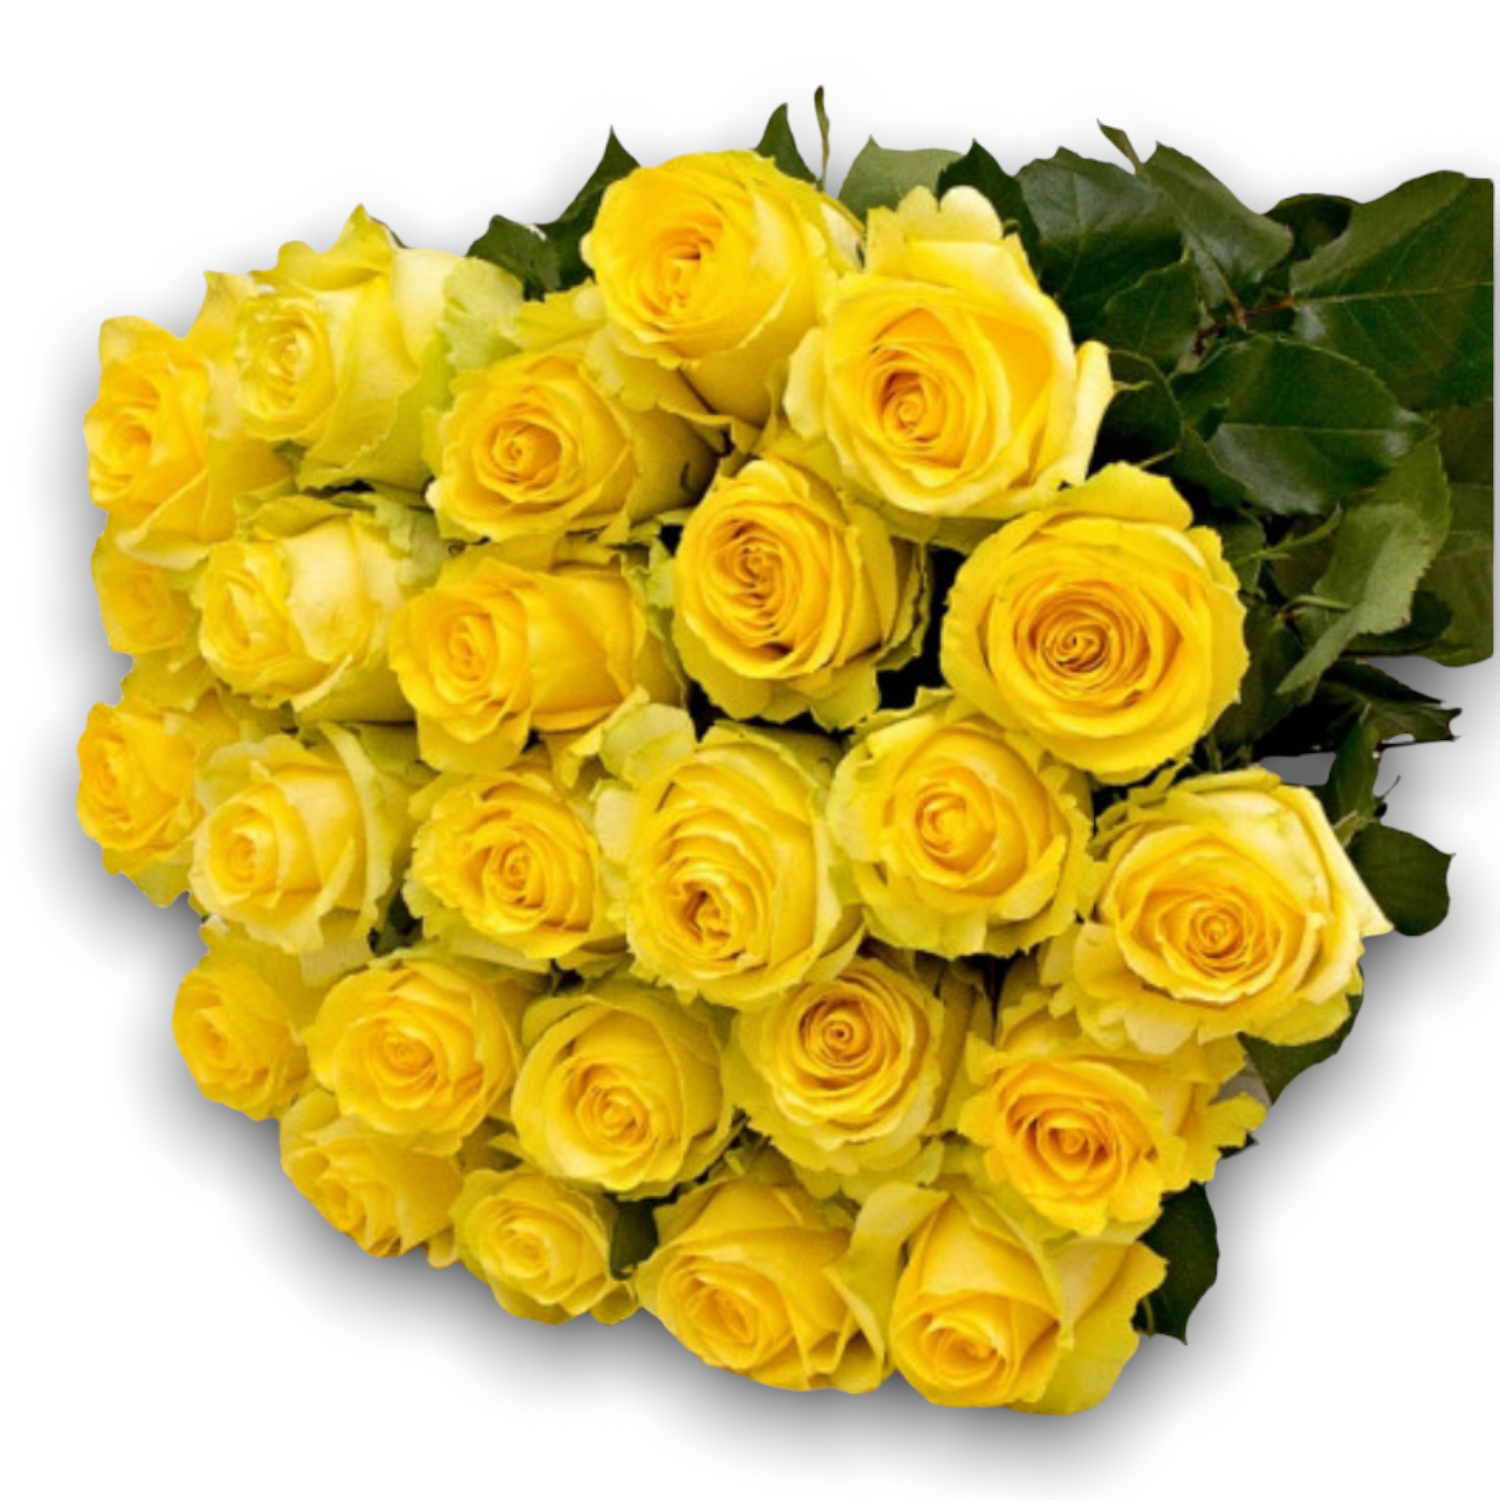 10+10 free Yellow Roses